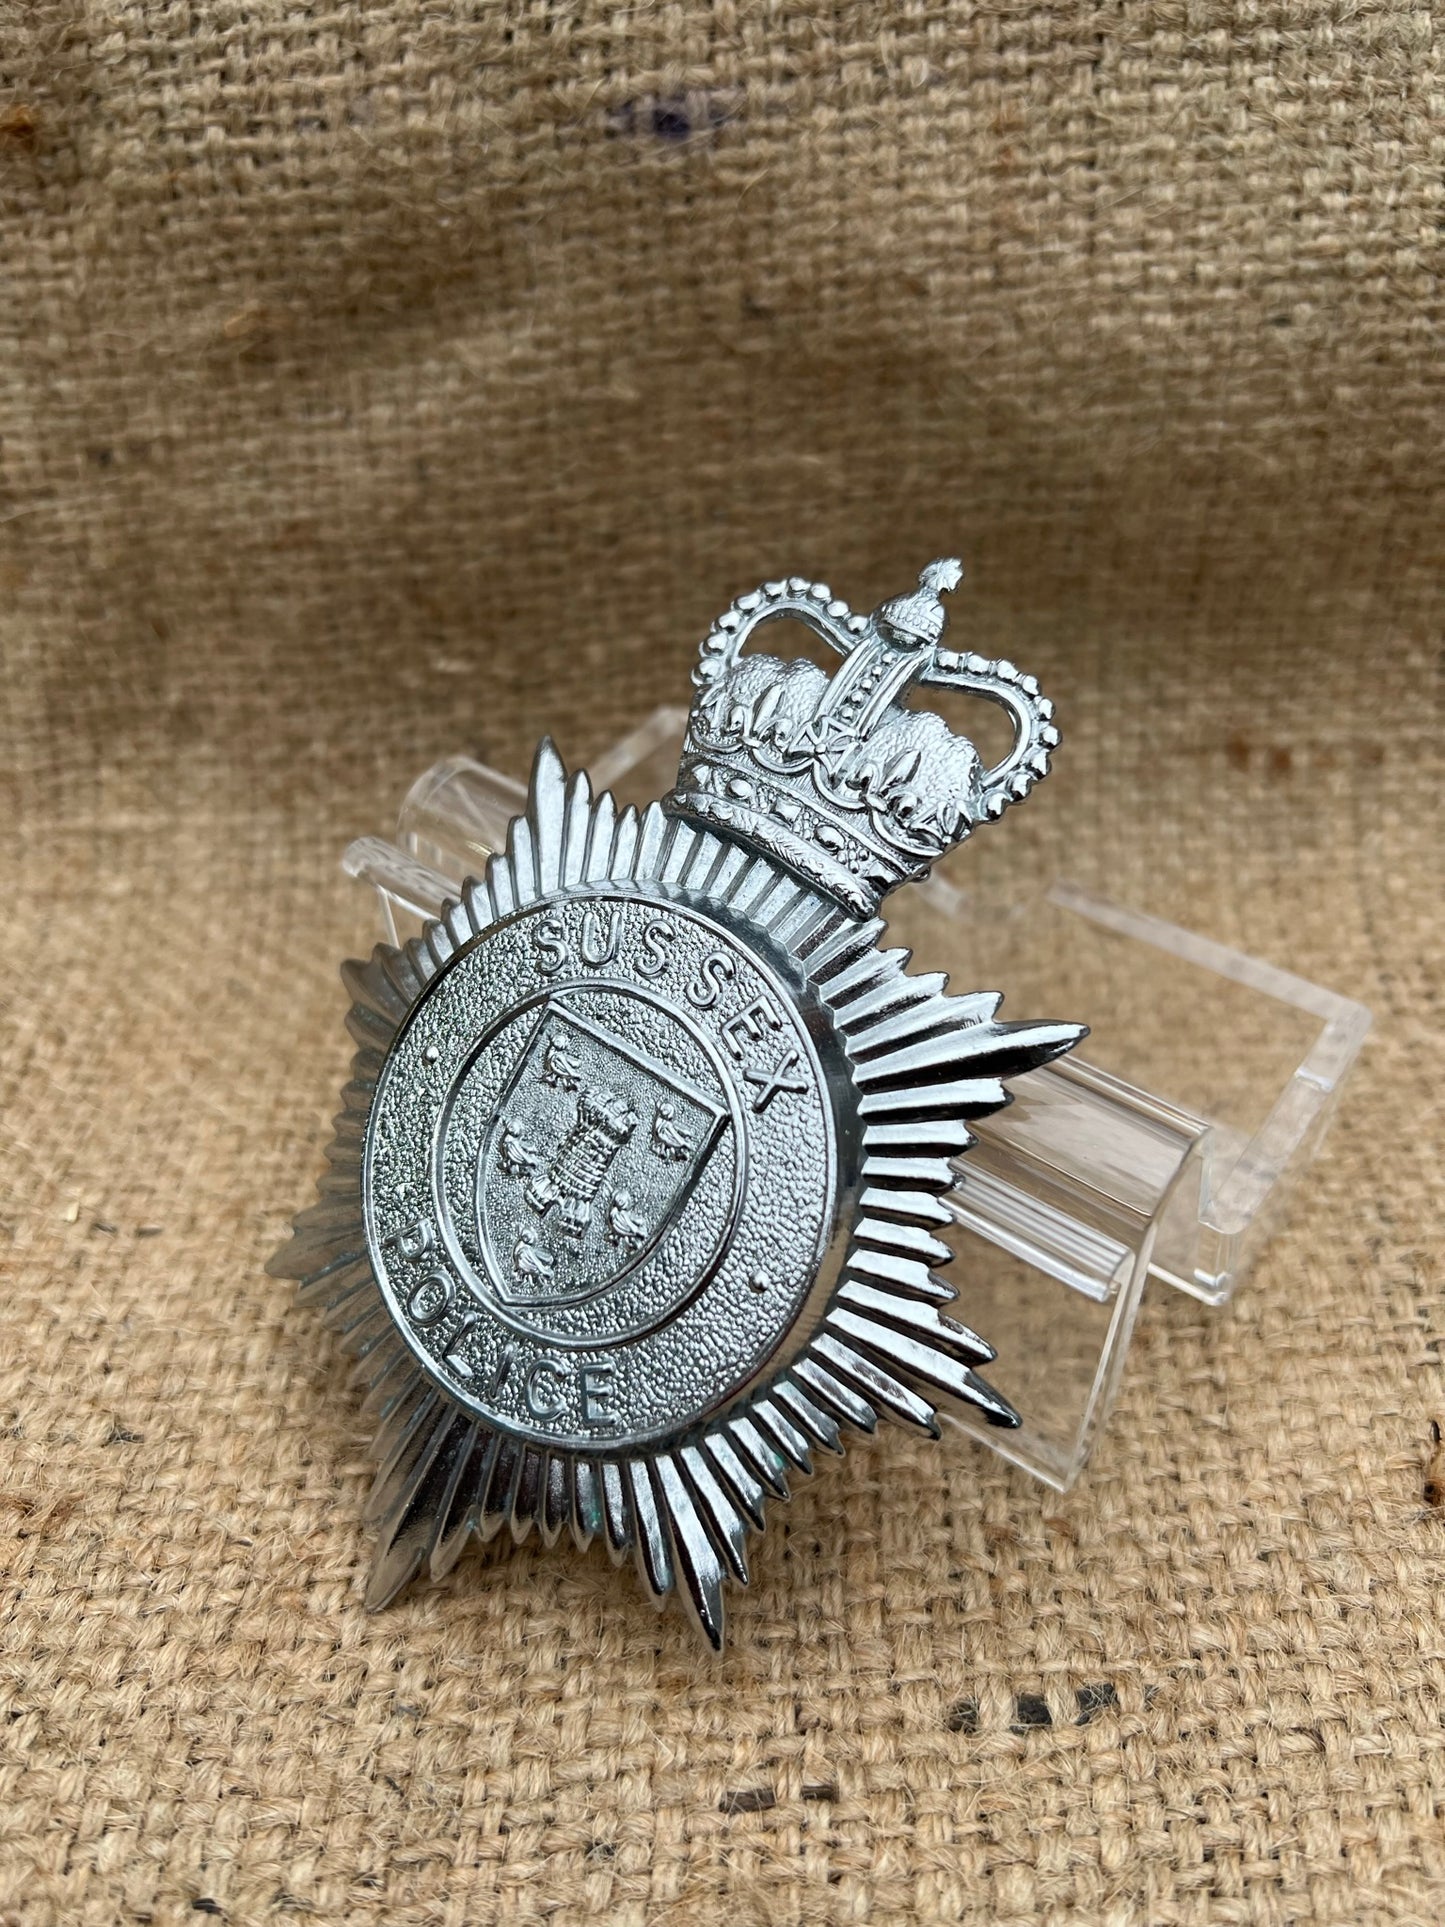 Obsolete Sussex Police Bobby Helmet Badge Crest Collector Badge Memorabilia